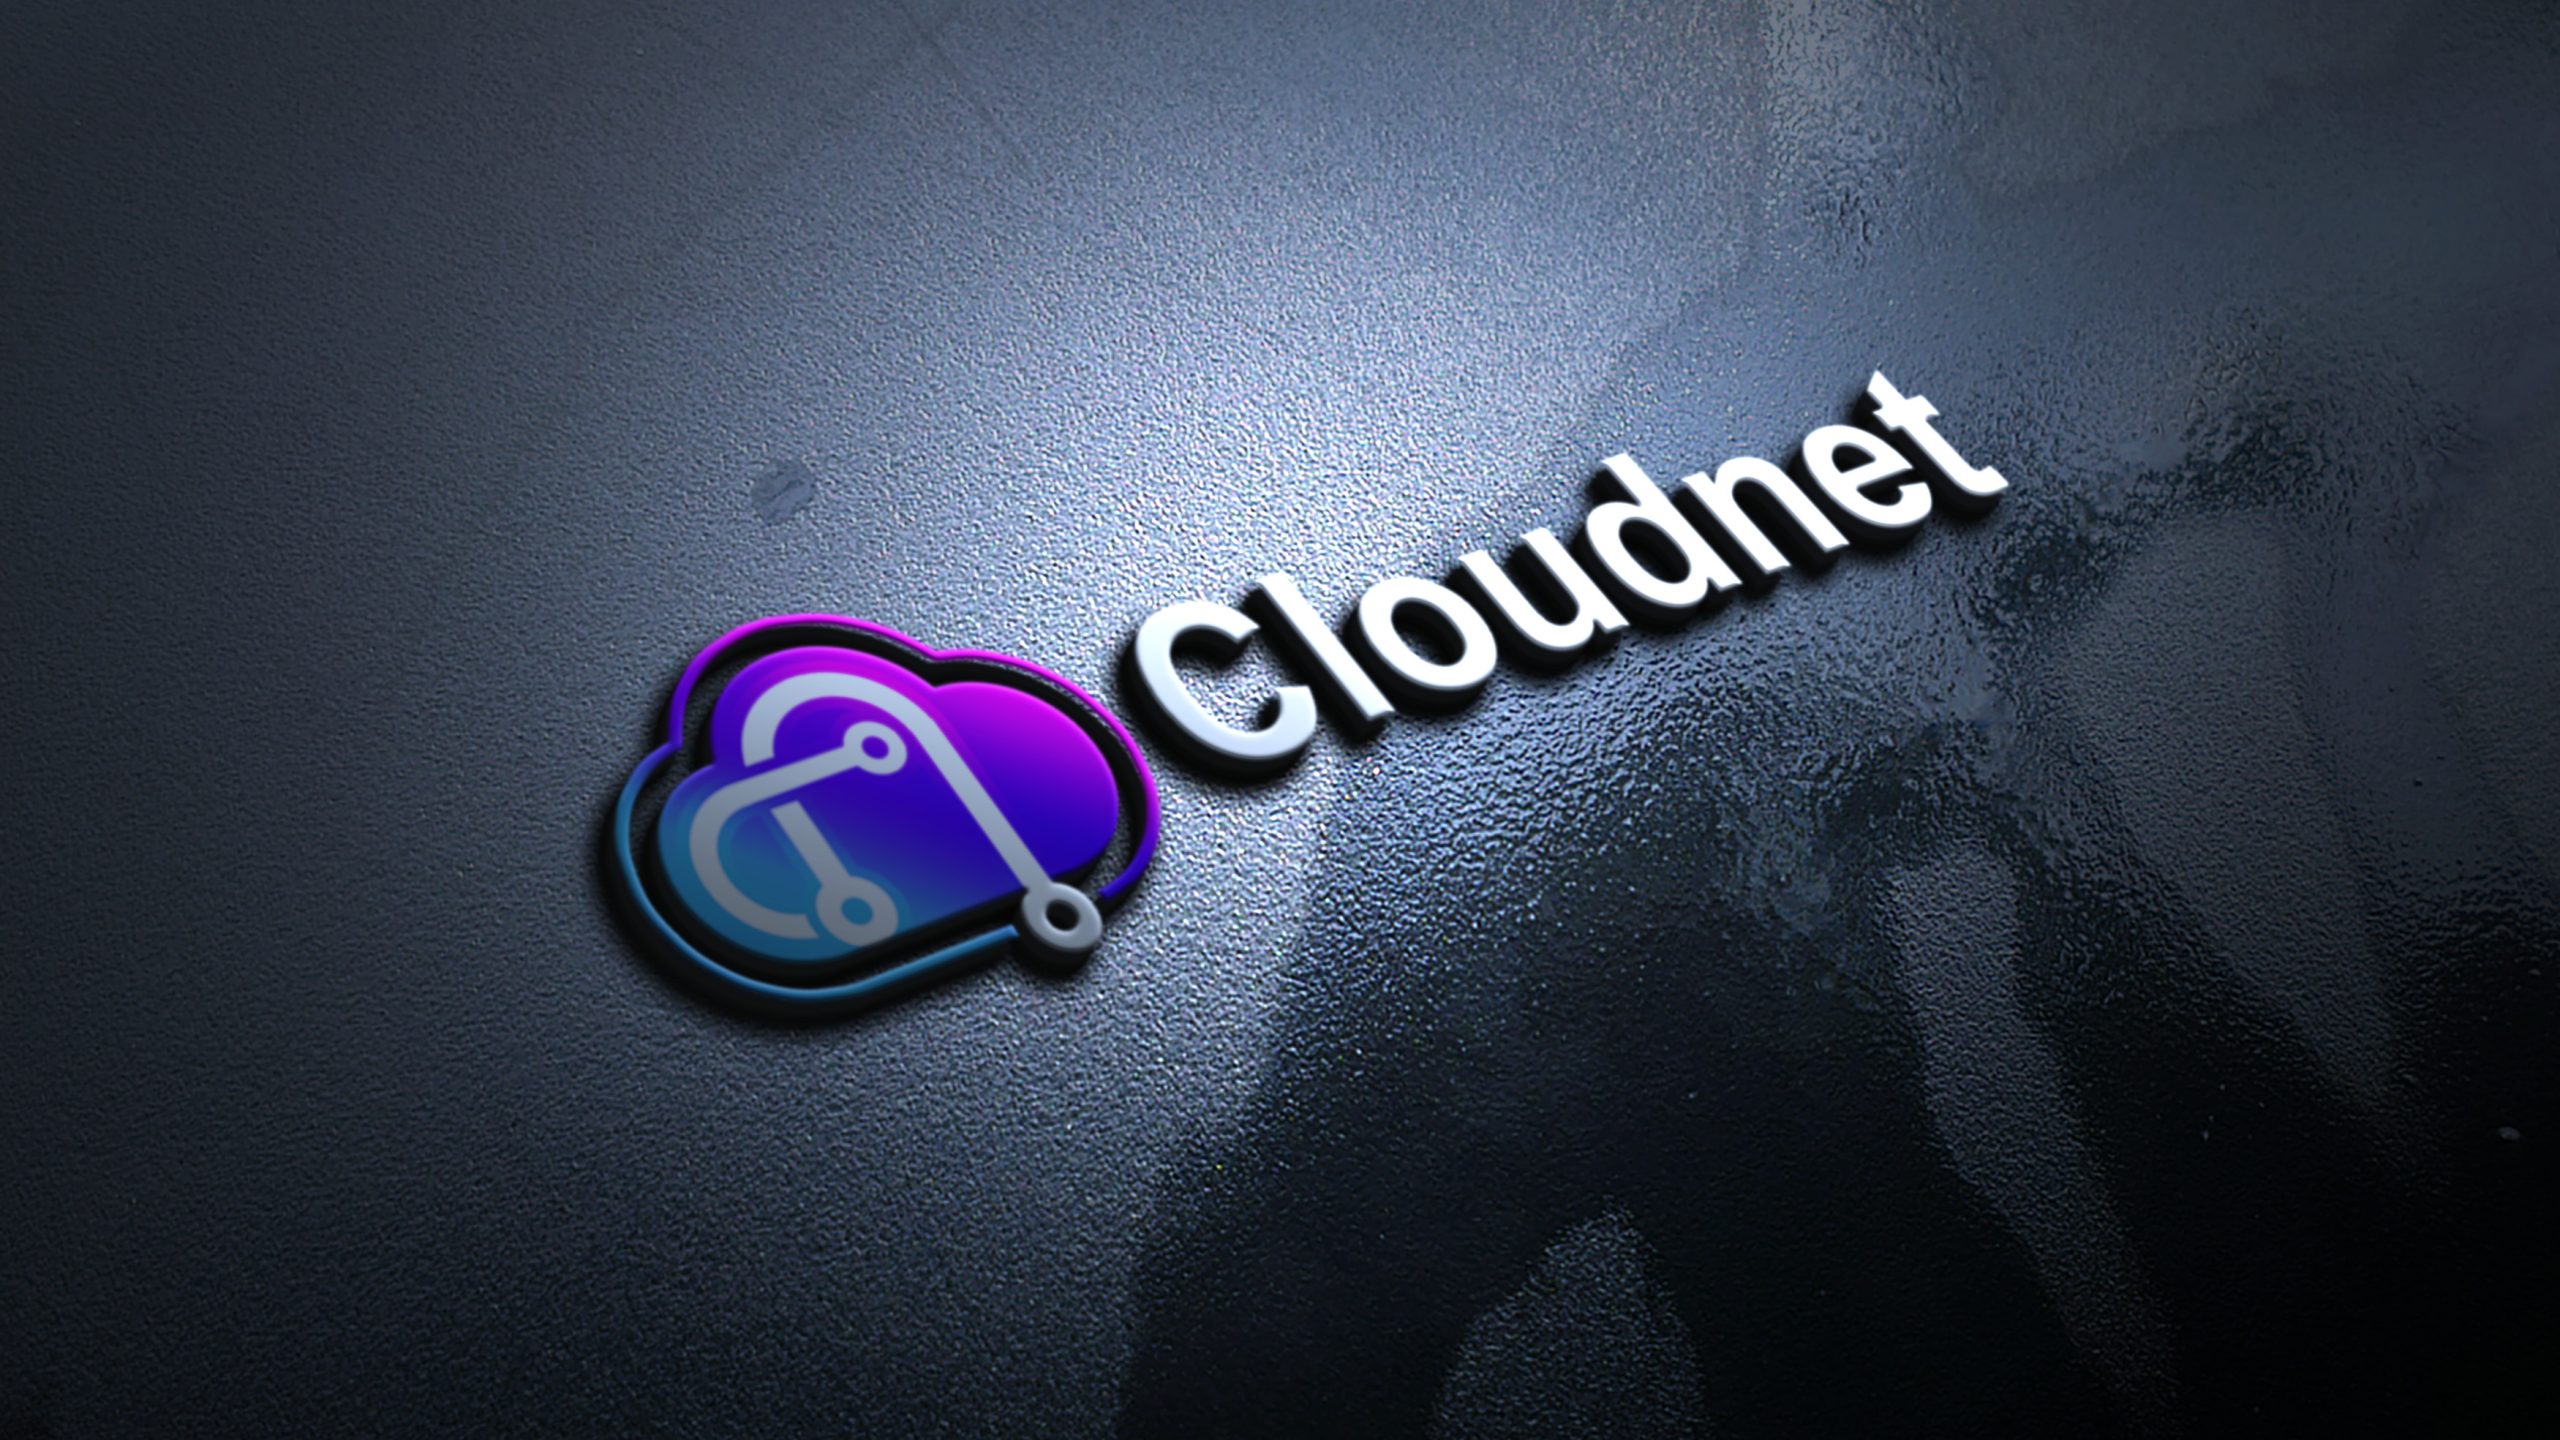 Free Download Cloudnet Logo Design